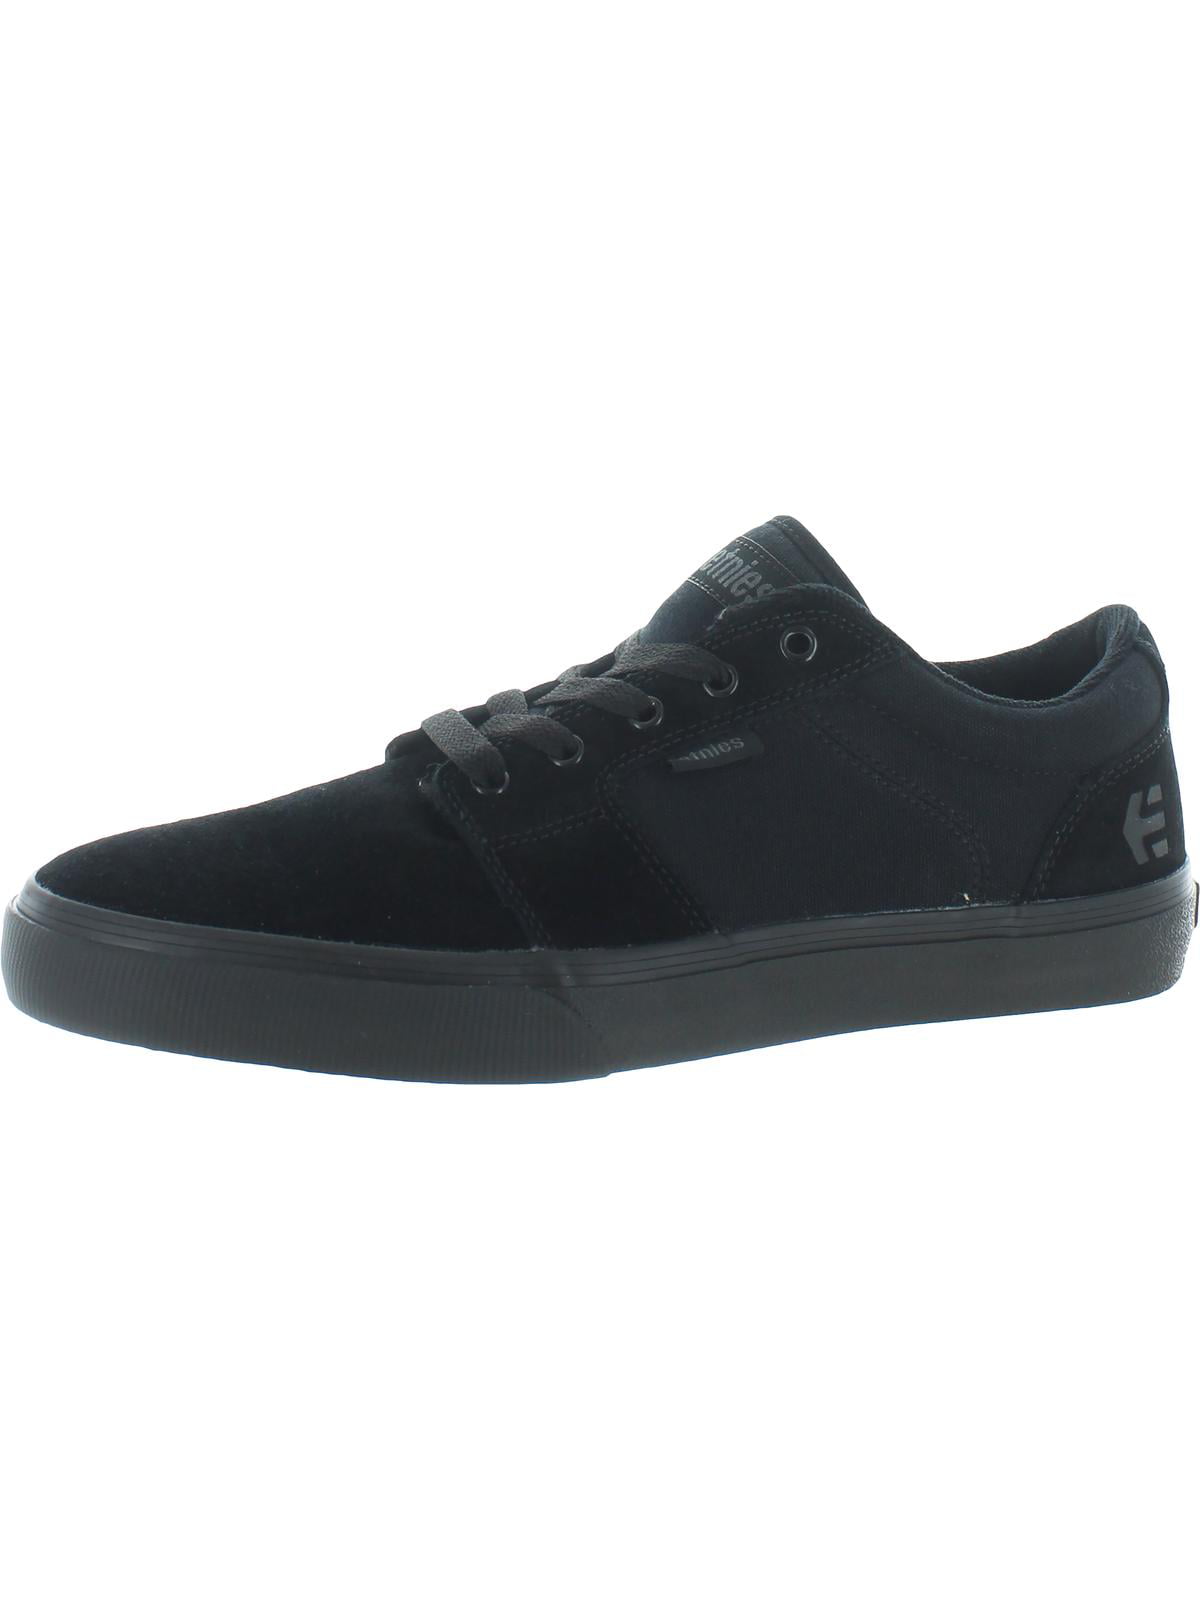 ETNIES 4101000351 004 BARGE LS Mn's Black/Black Suede/Canvas Skate Shoes M 